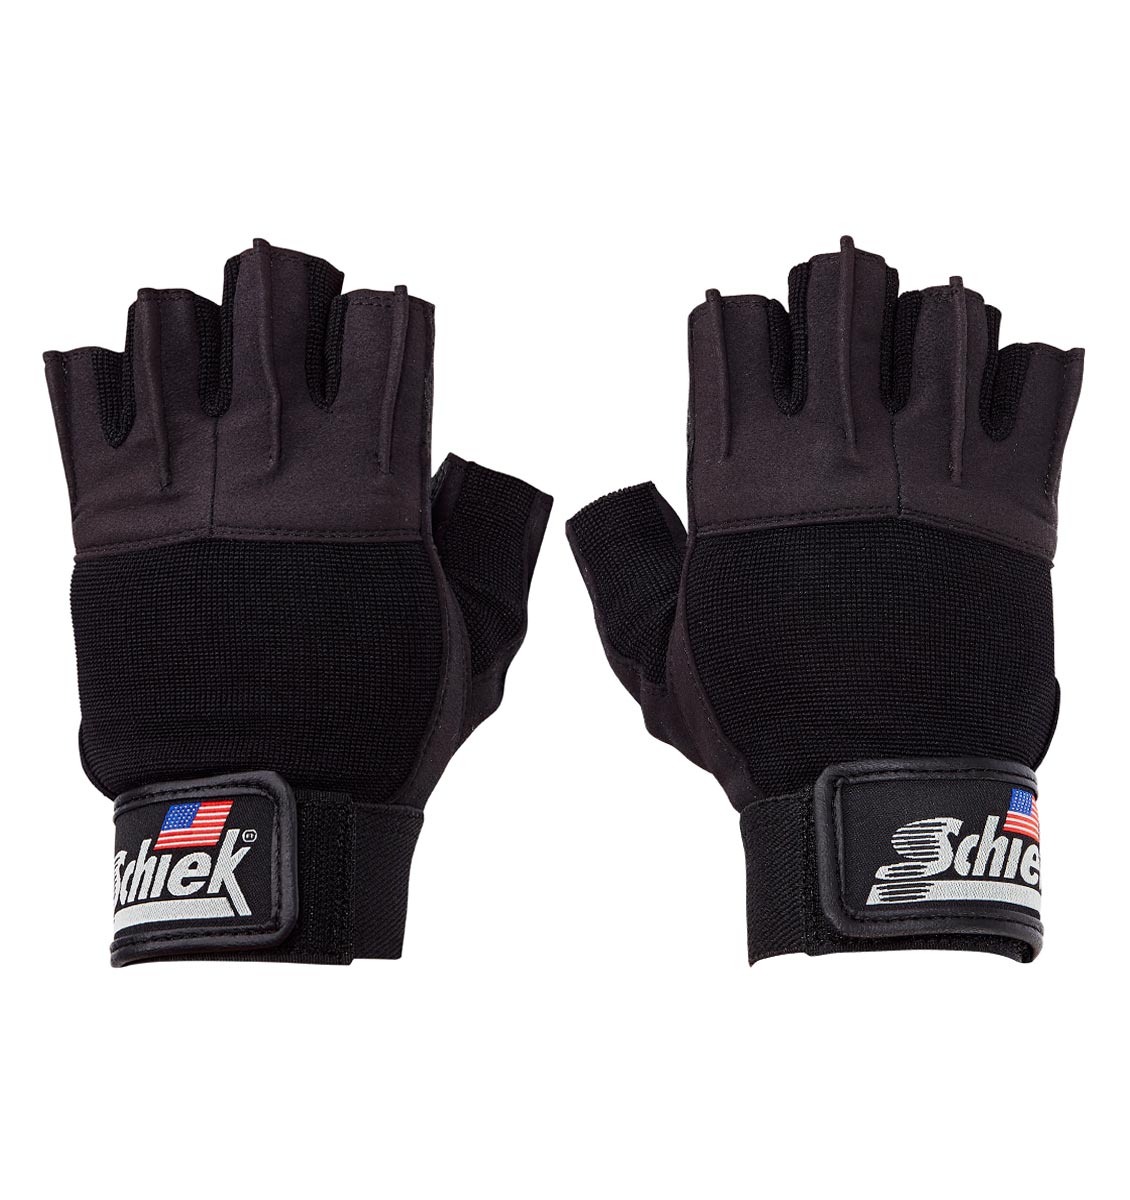 530 Schiek Platinum Series Lifting Gym Gloves with Fins Pair Top